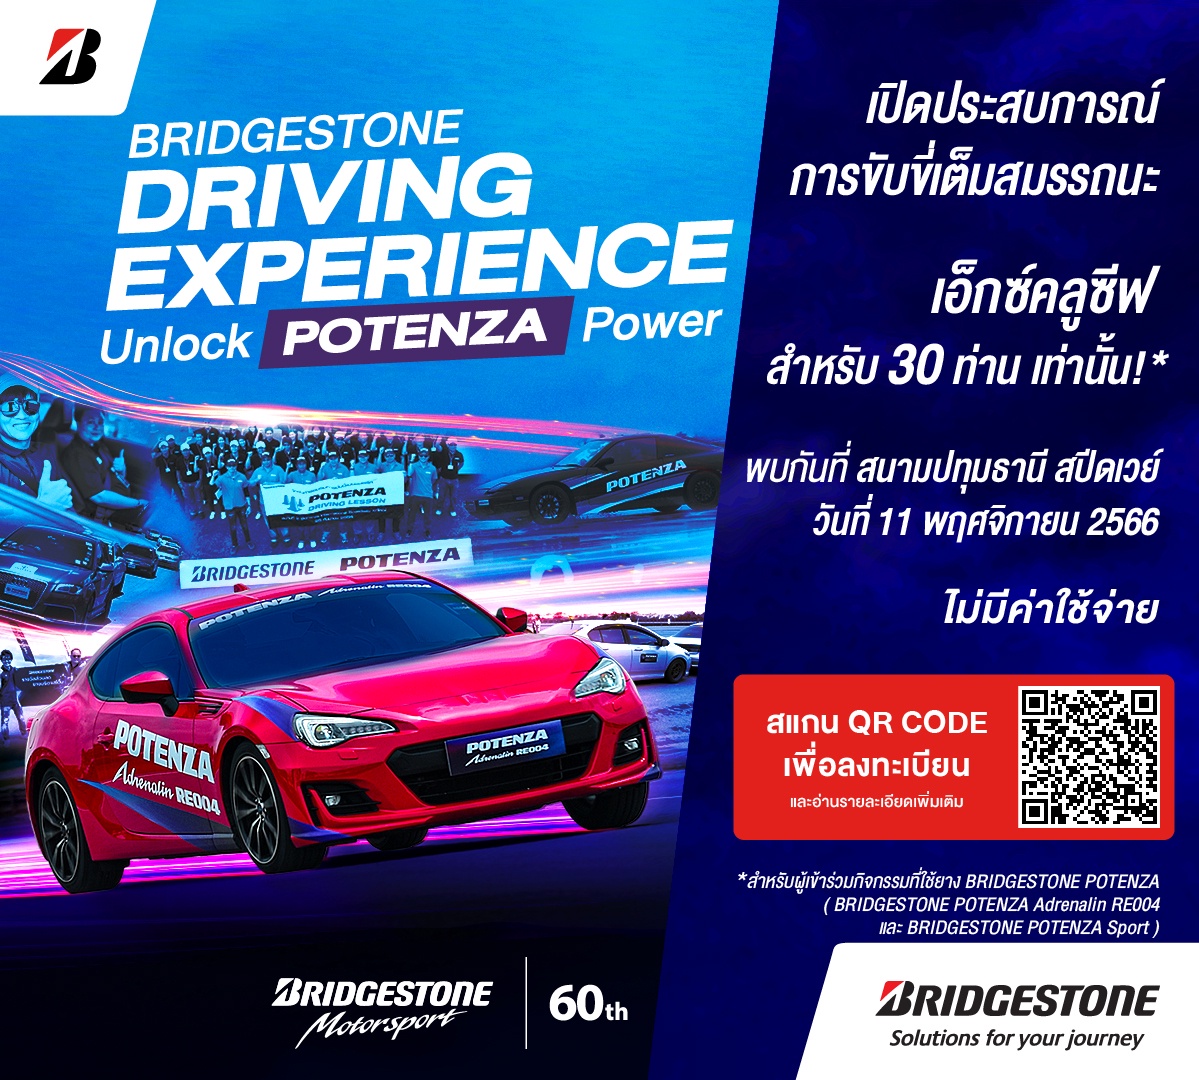 Bridgestone Invites Sports Car Enthusiasts to Unlock Driving Performance in BRIDGESTONE DRIVING EXPERIENCE: Unlock POTENZA